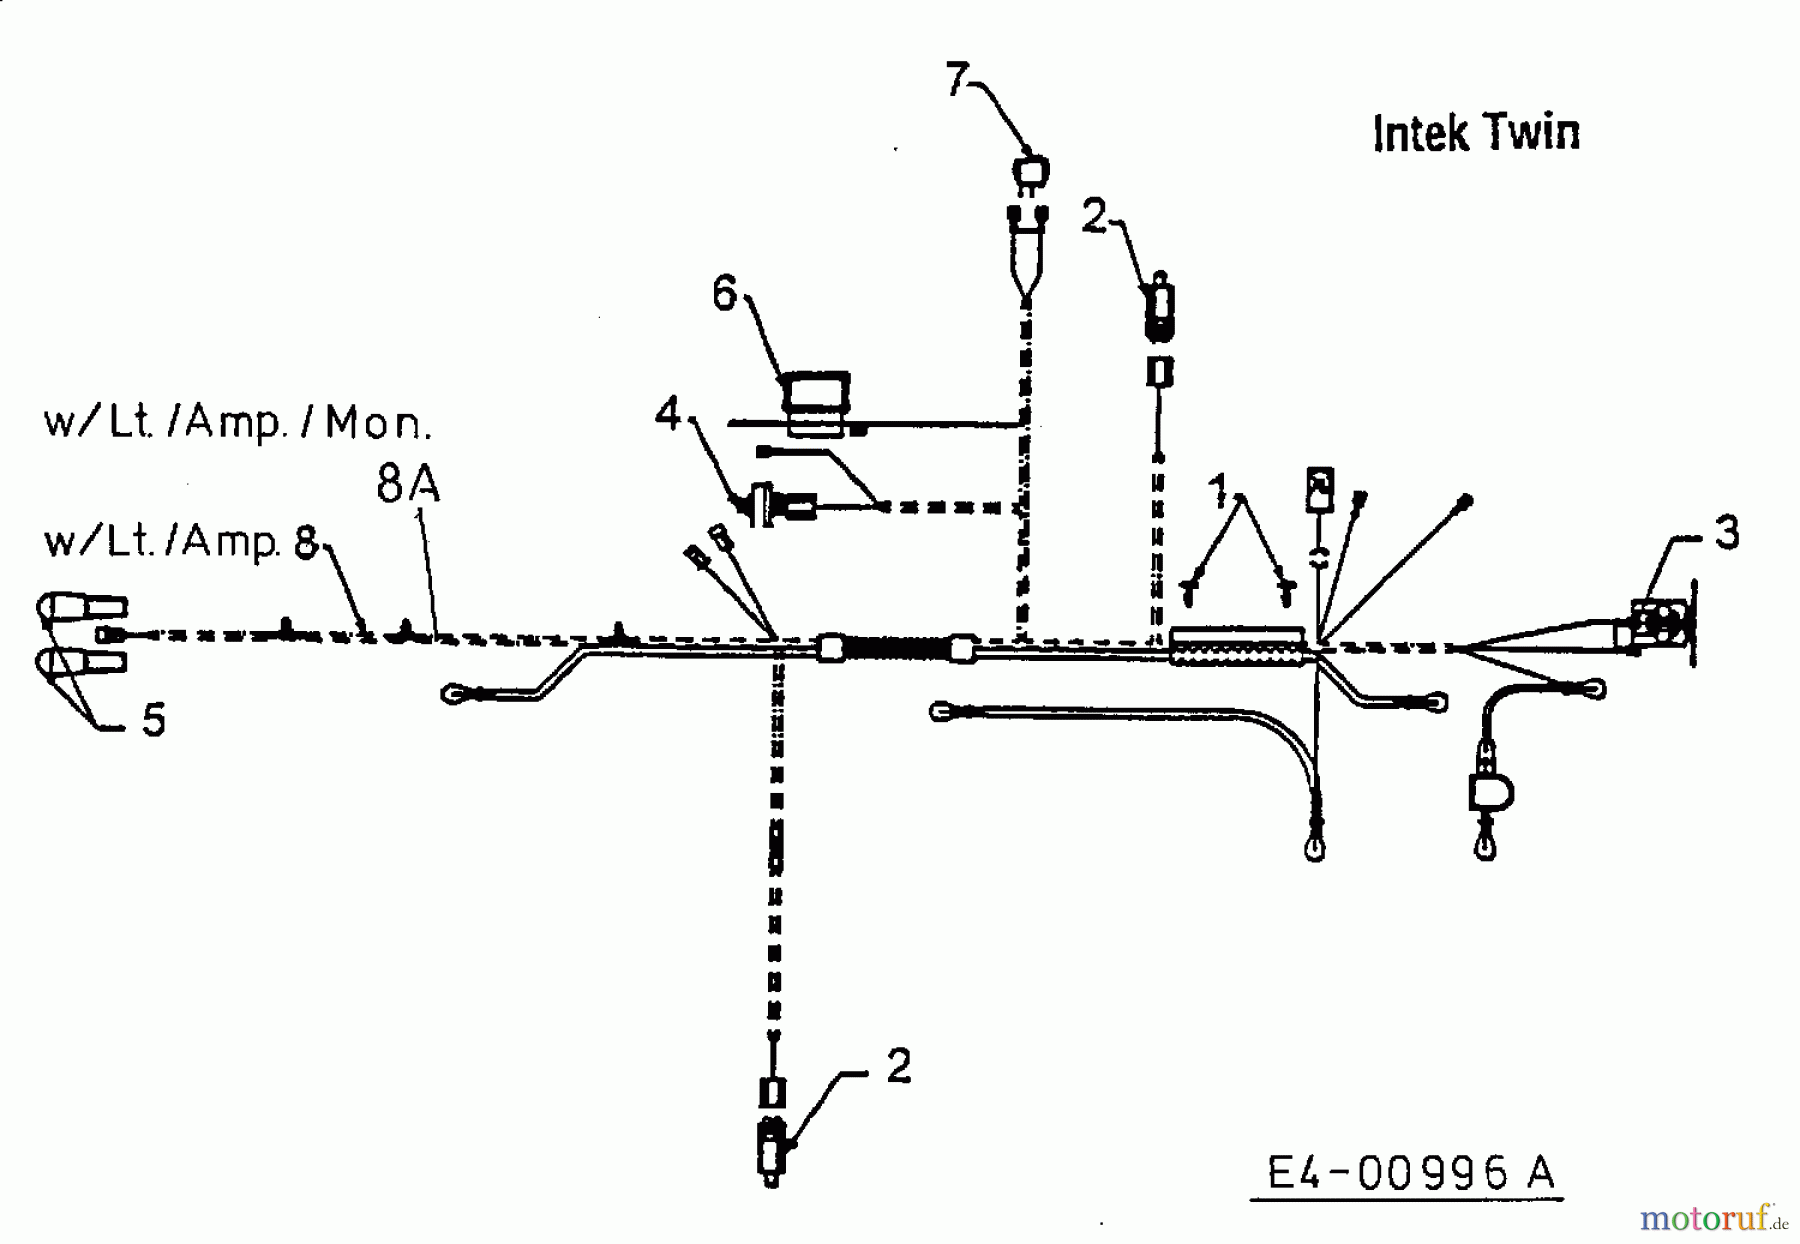  MTD Lawn tractors H 125 13AH690F678  (1998) Wiring diagram Intek Twin